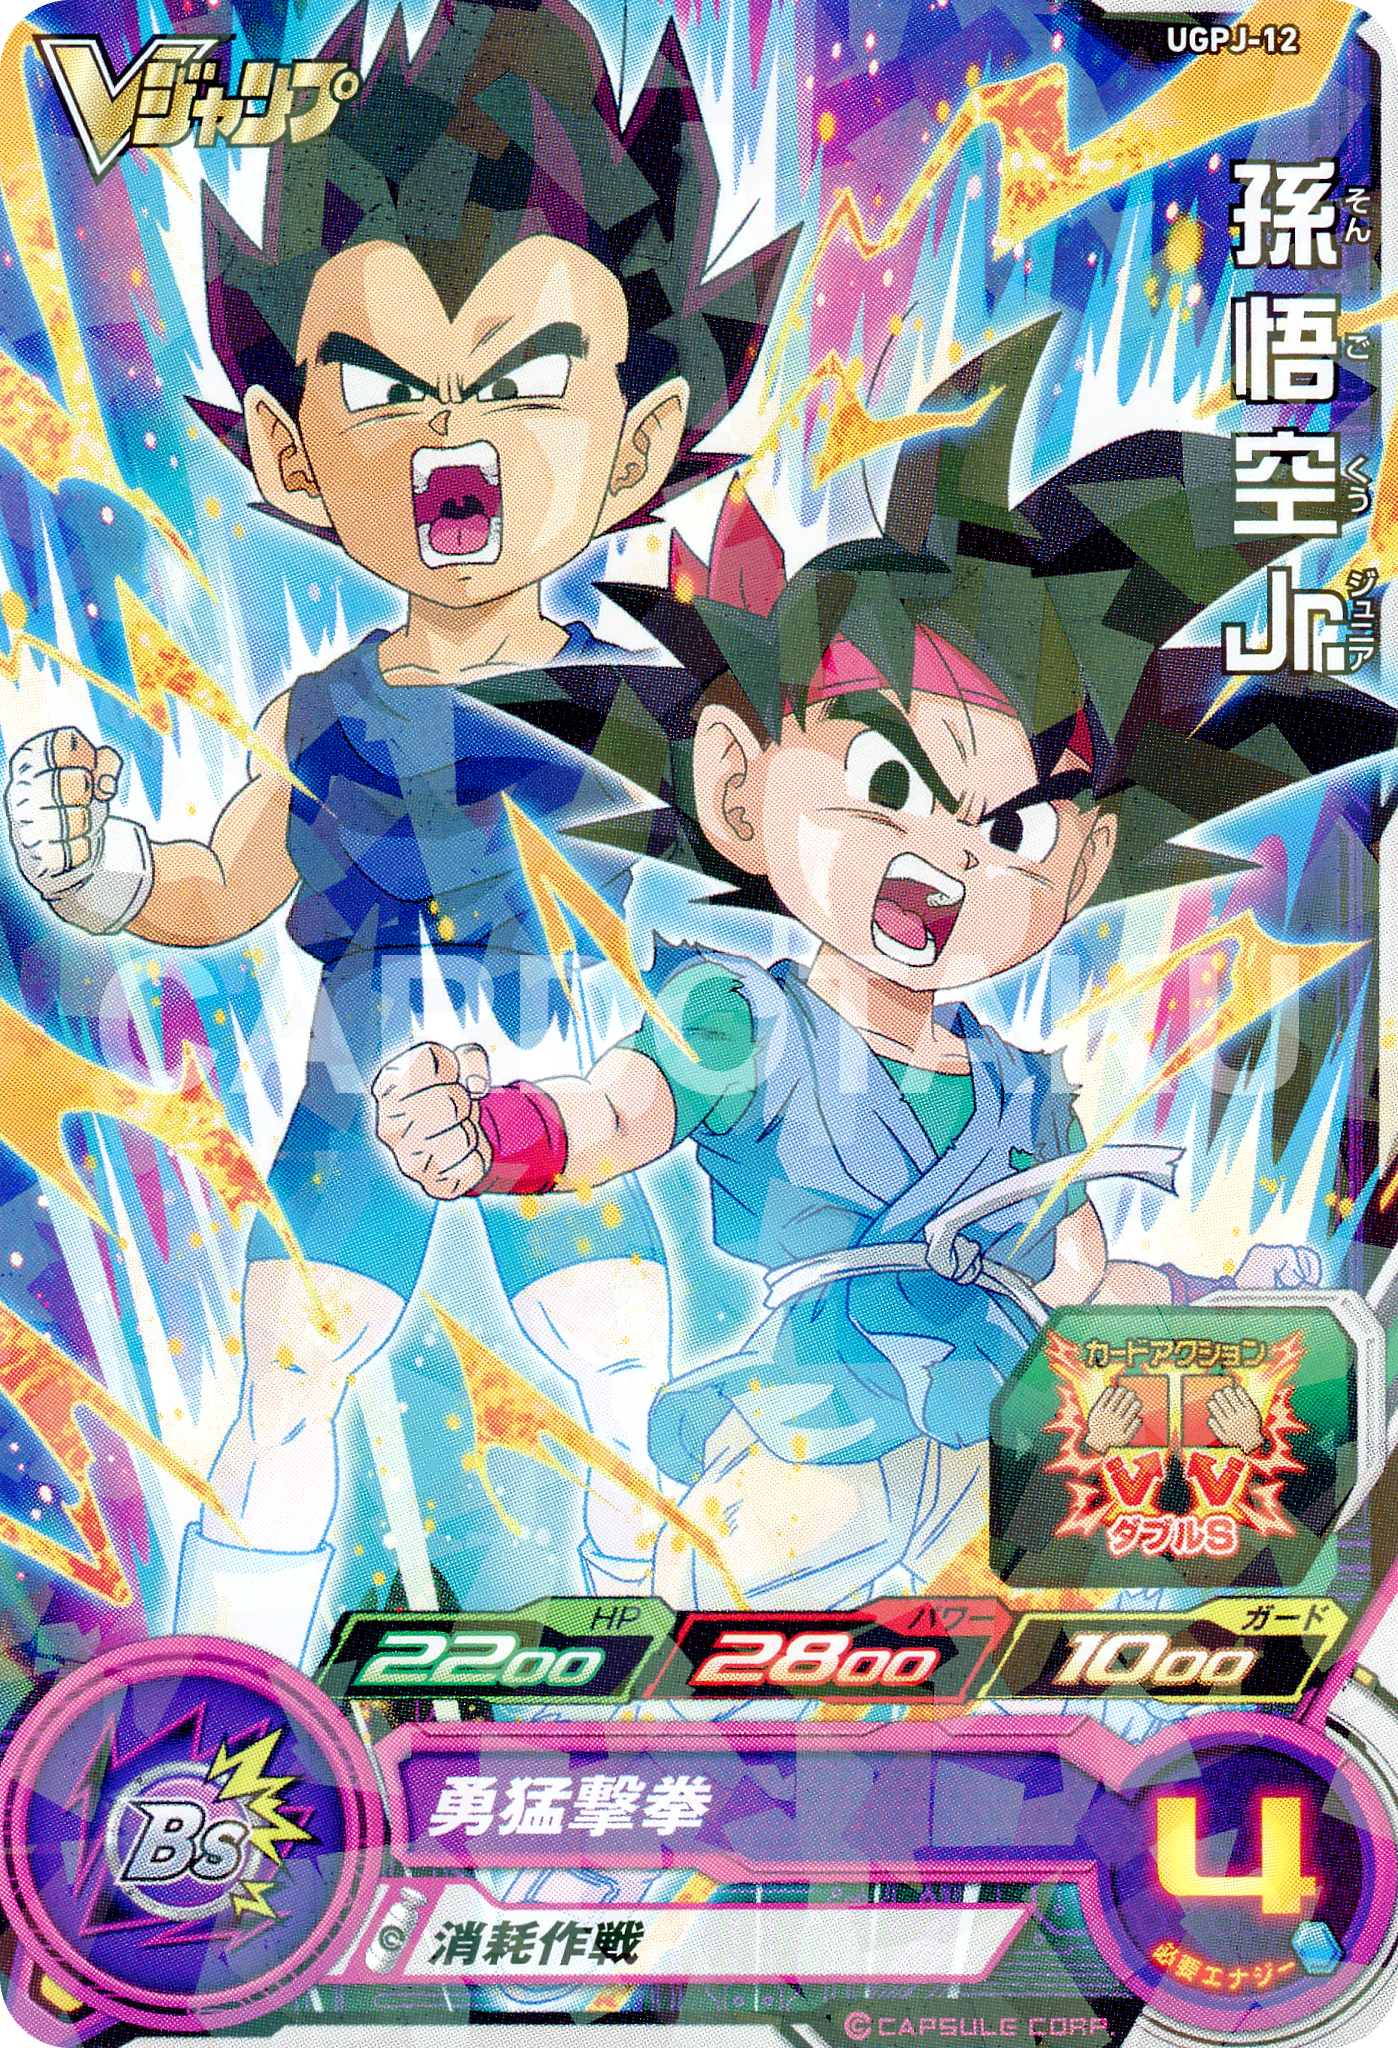 SUPER DRAGON BALL HEROES UGPJ-10  Promotional card sold with the November 2022 issue of V Jump magazine released September 21 2021  Son Goku Jr.